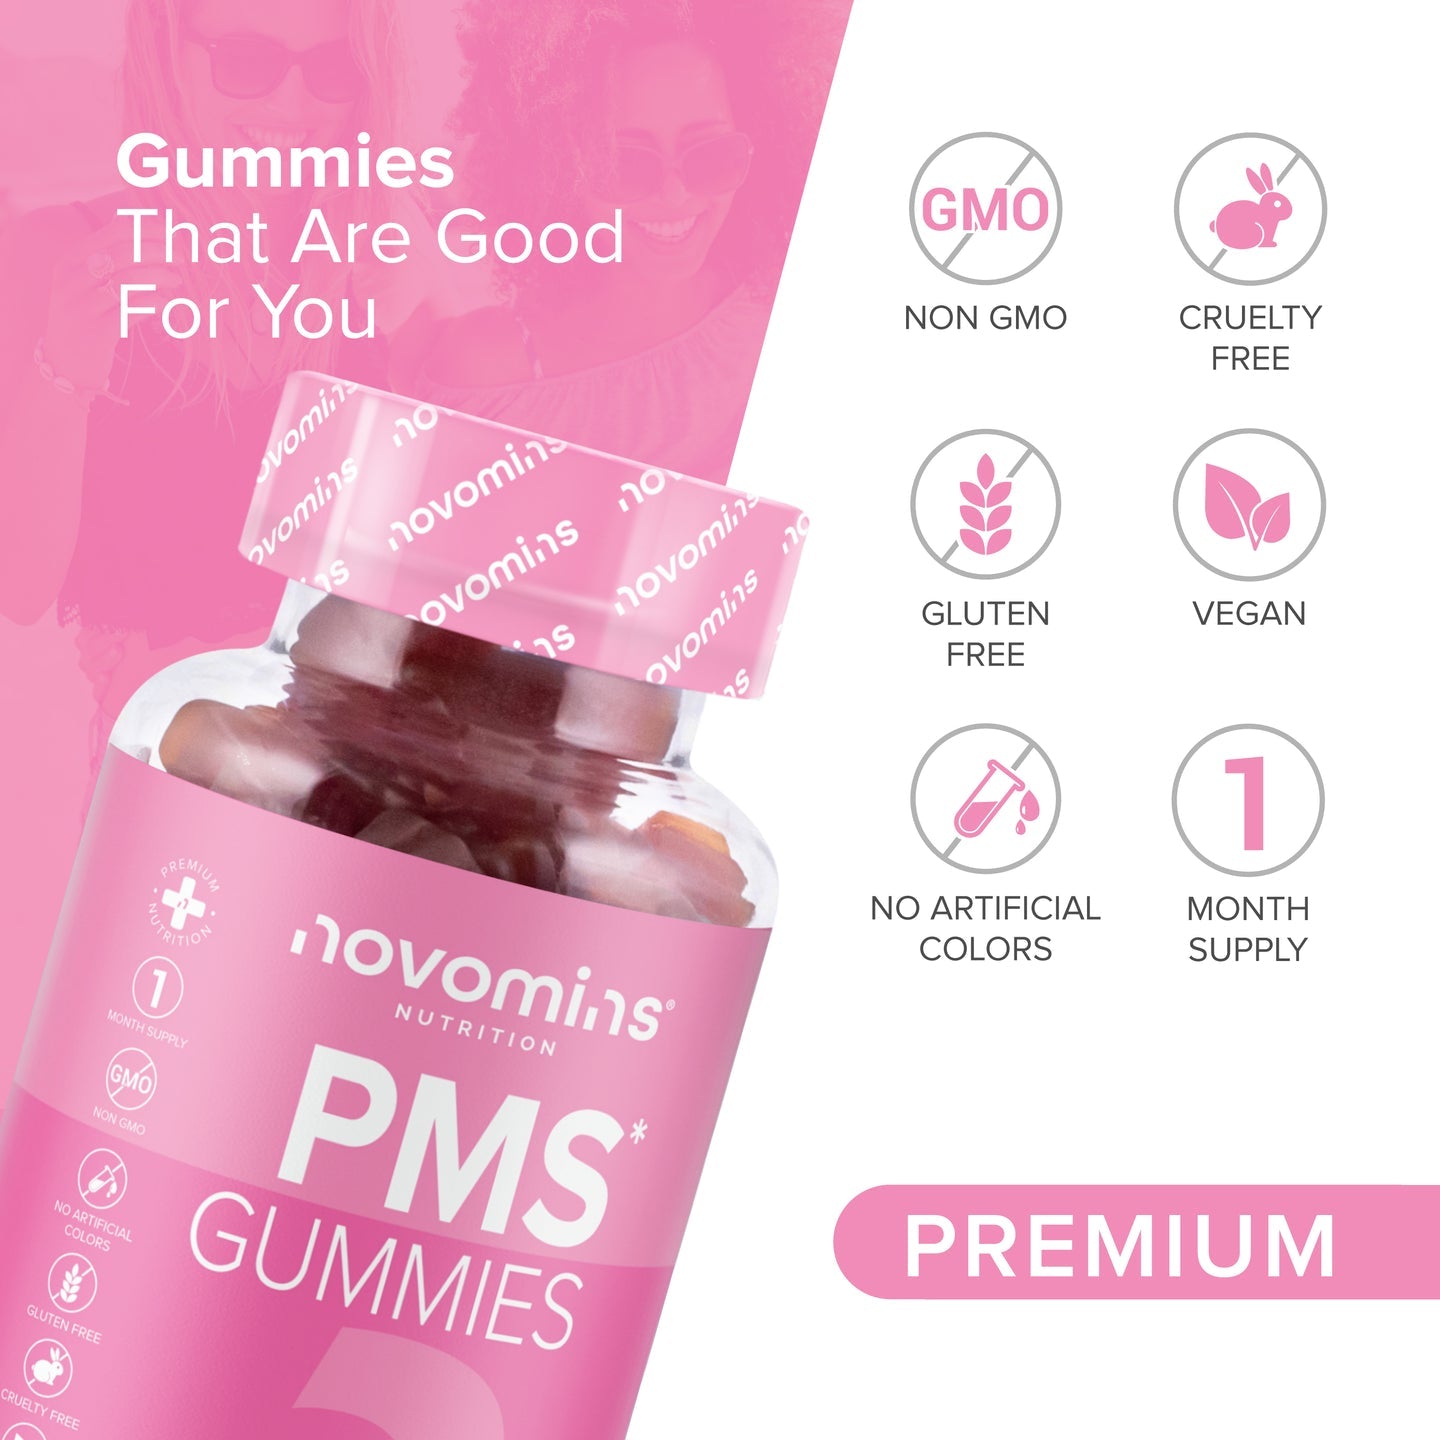 Novomins Nutrition PMS Gummies Hormonal Balance